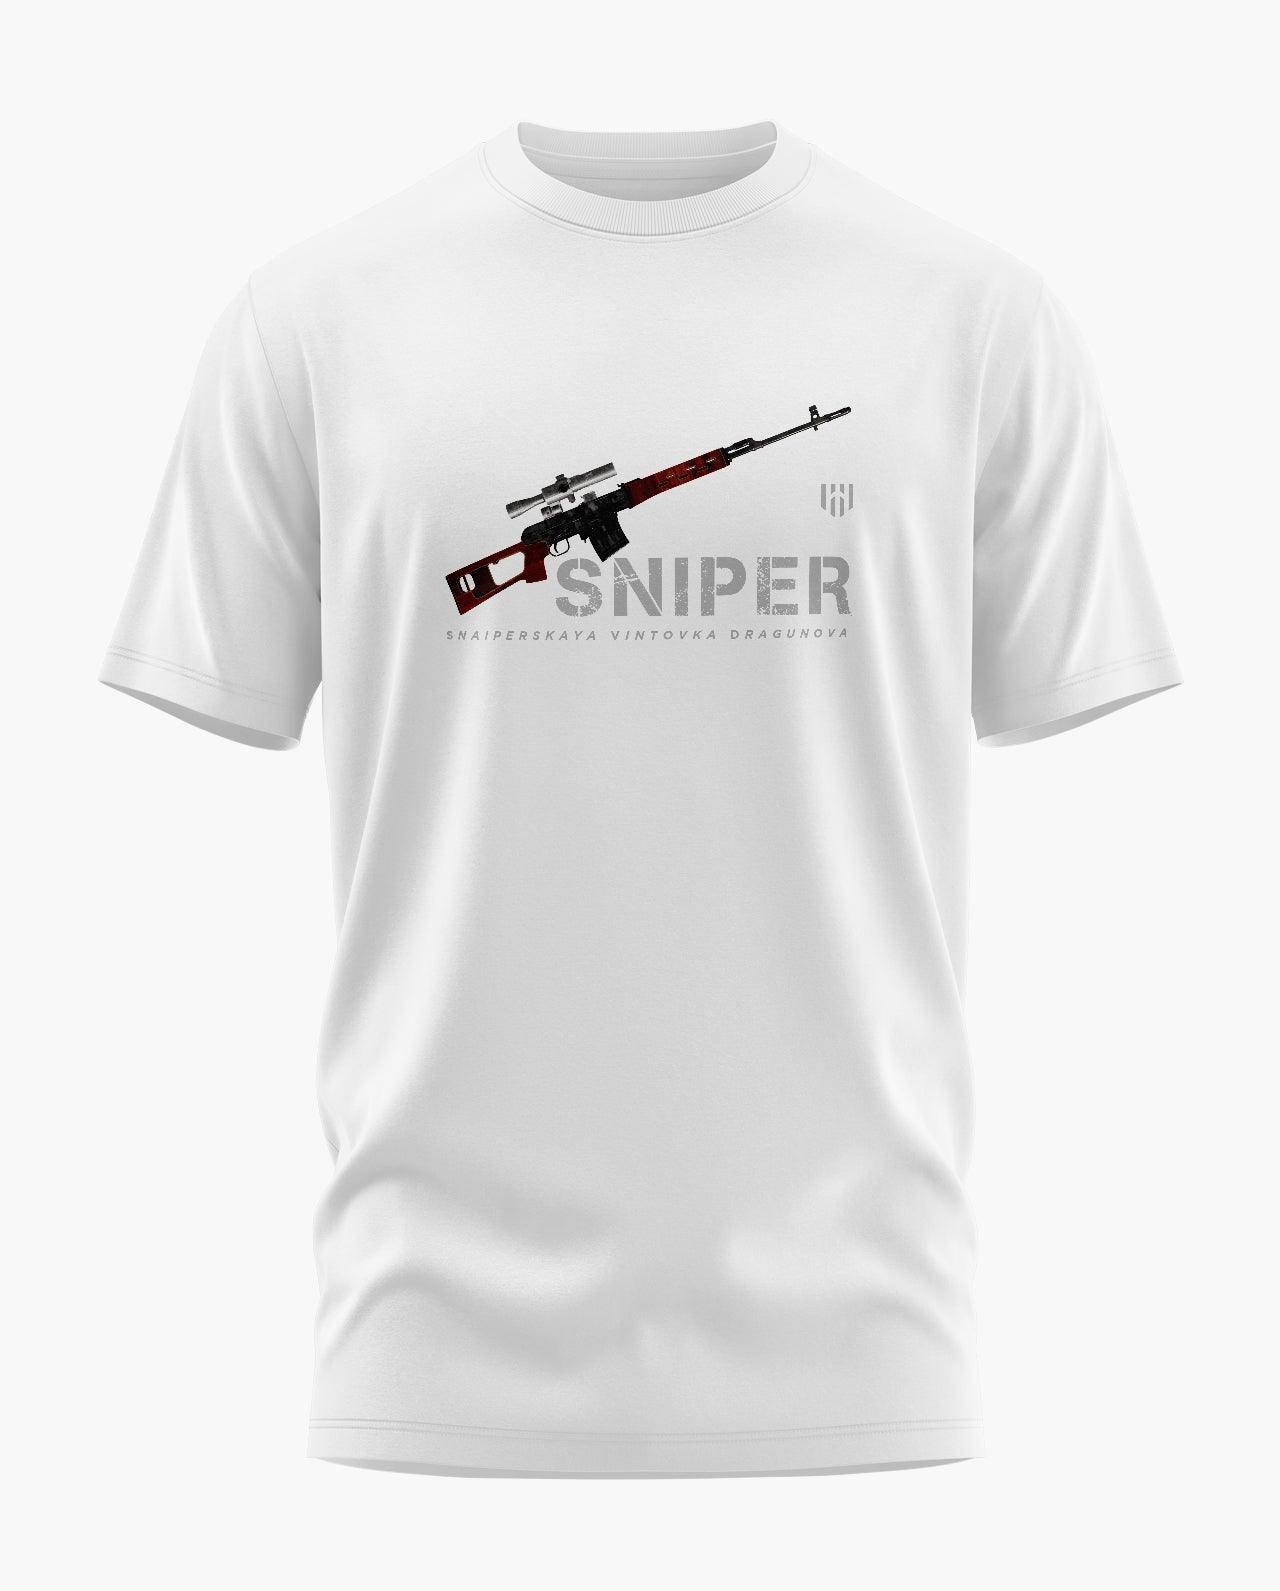 SVD Sniper T-Shirt exclusive at Aero Armour